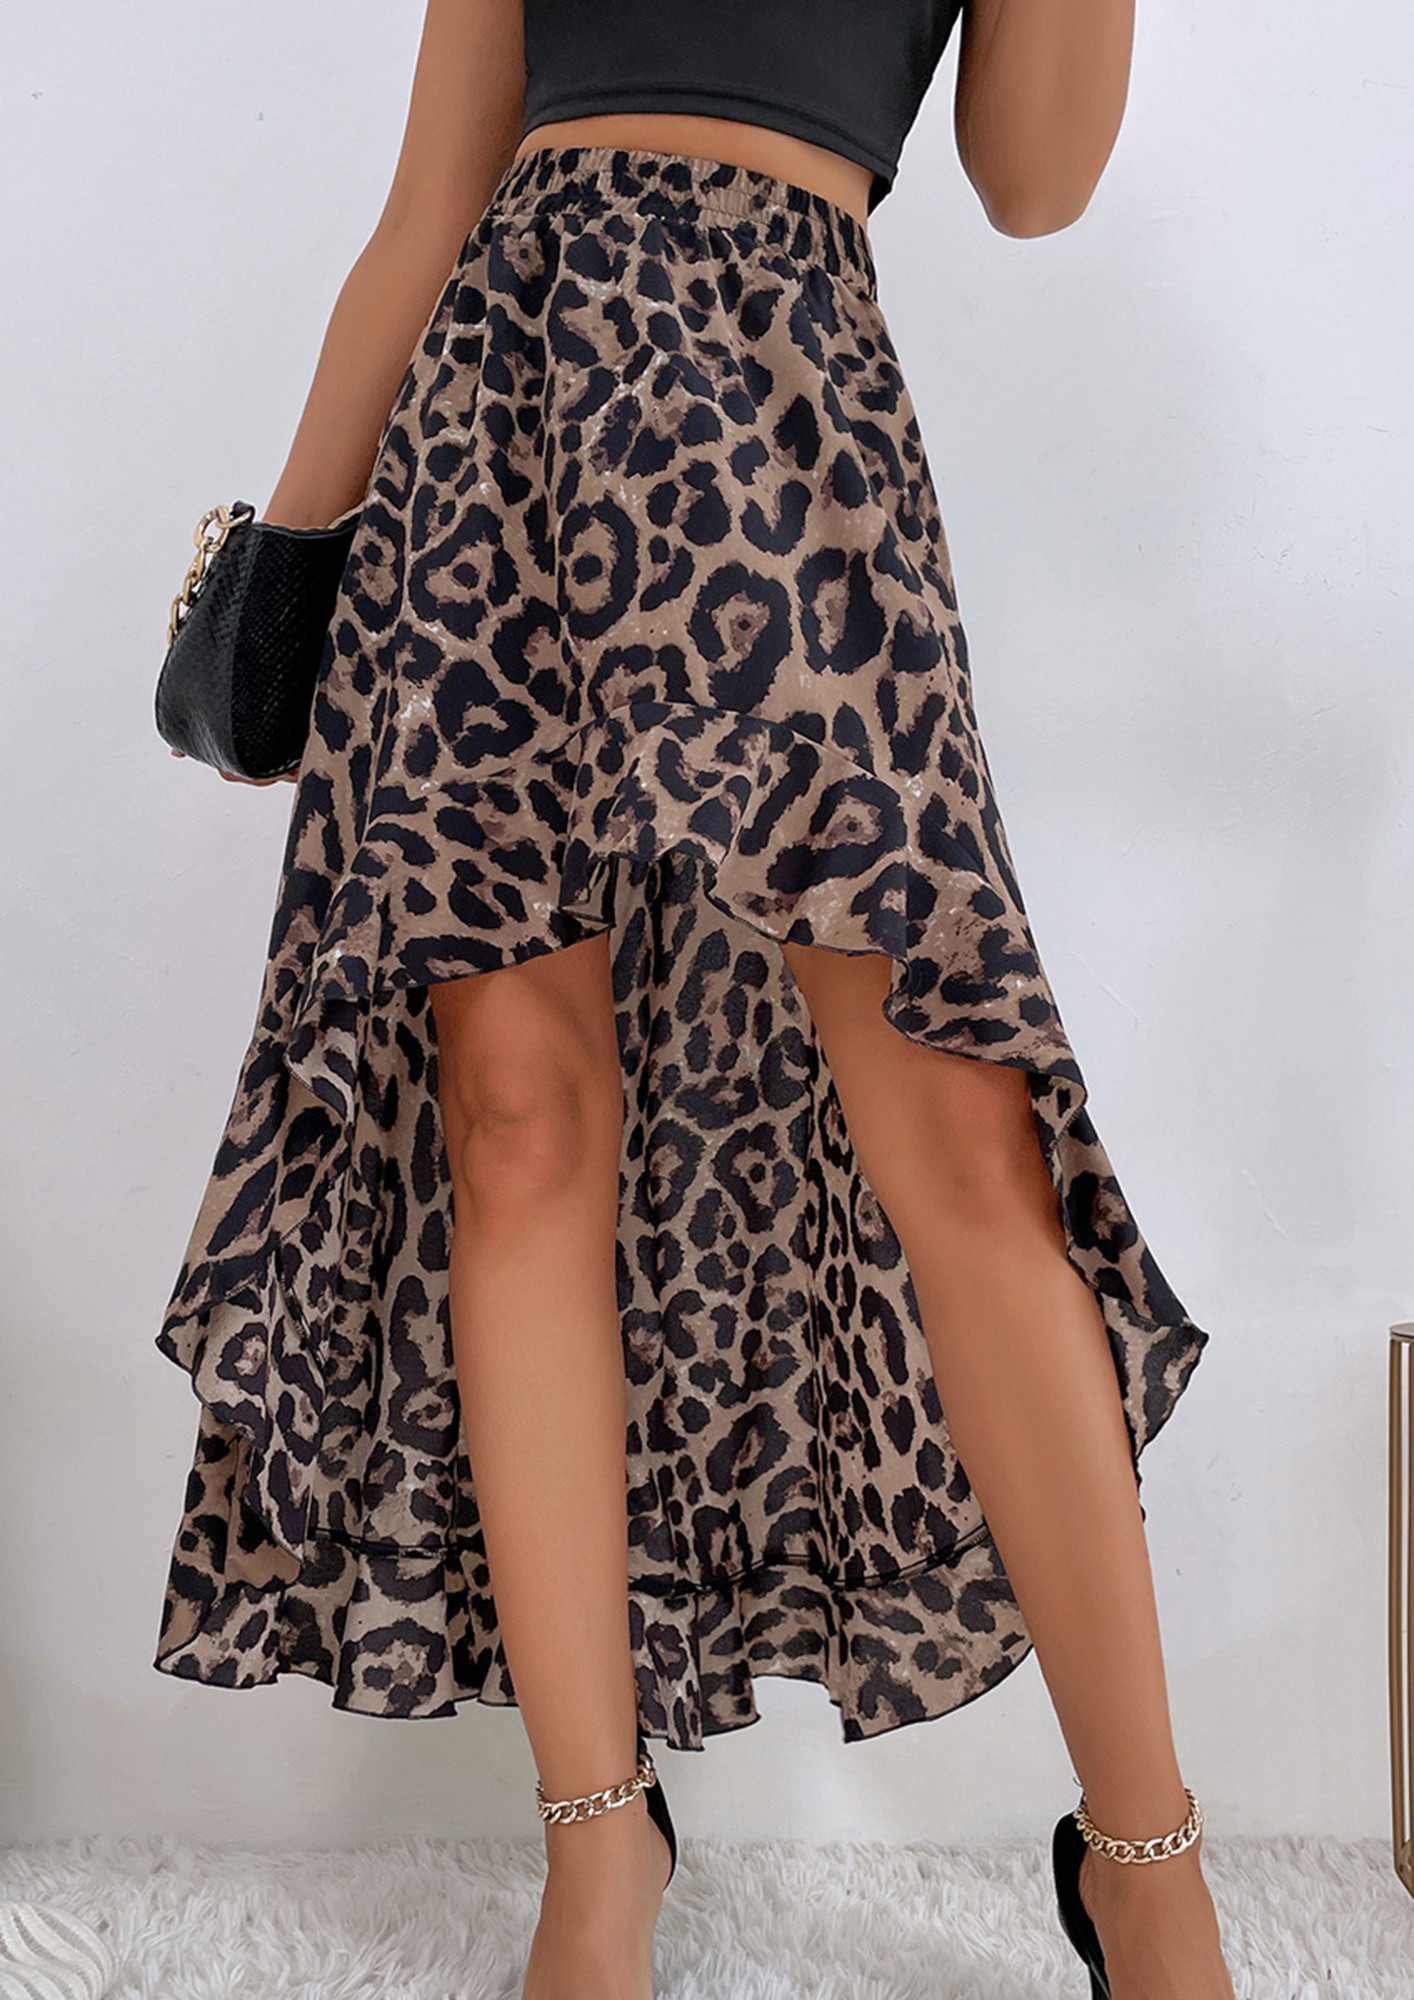 Chic Leopard Print Skirt - Bodycon Skirt - Pencil Skirt - $27.00 - Lulus-vdbnhatranghotel.vn